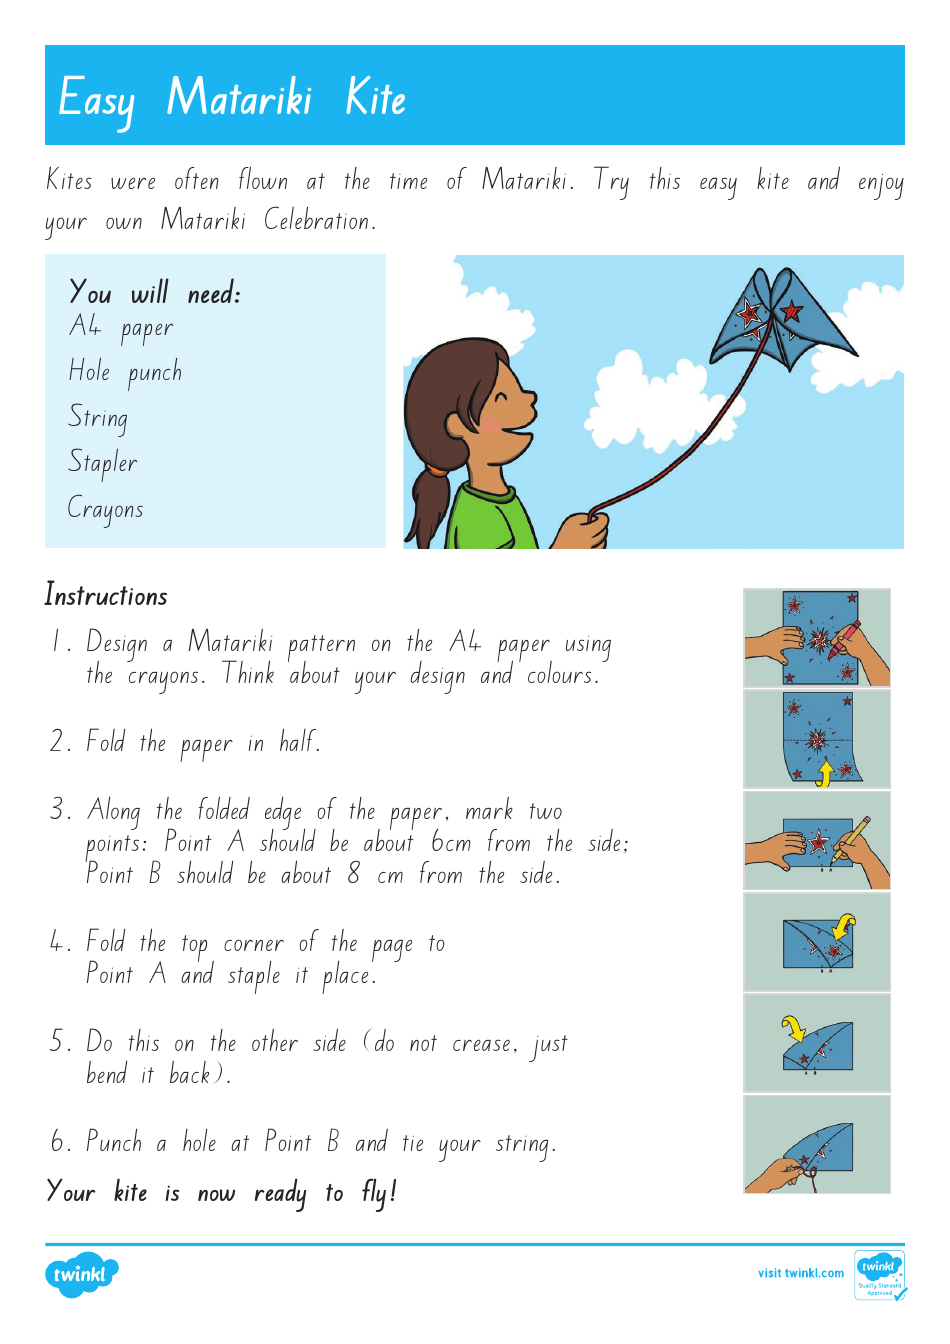 Easy Matariki Kite - DIY Guide